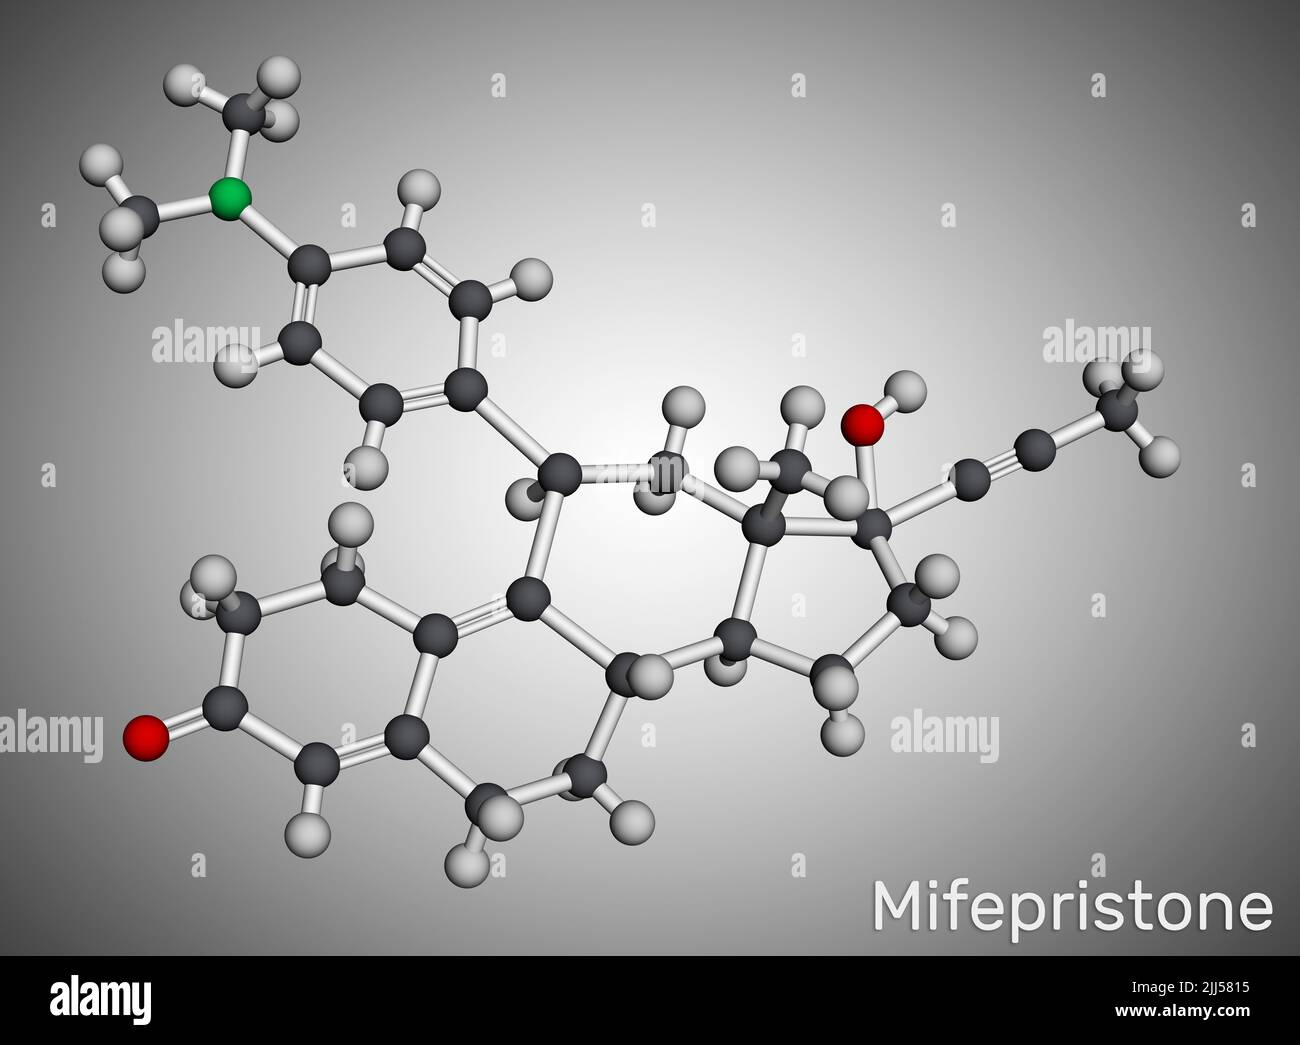 Mifepristone, molecule. It is progestational, glucocorticoid hormone antagonist, emergency contraceptive agent. Molecular model. 3D rendering. Illustr Stock Photo